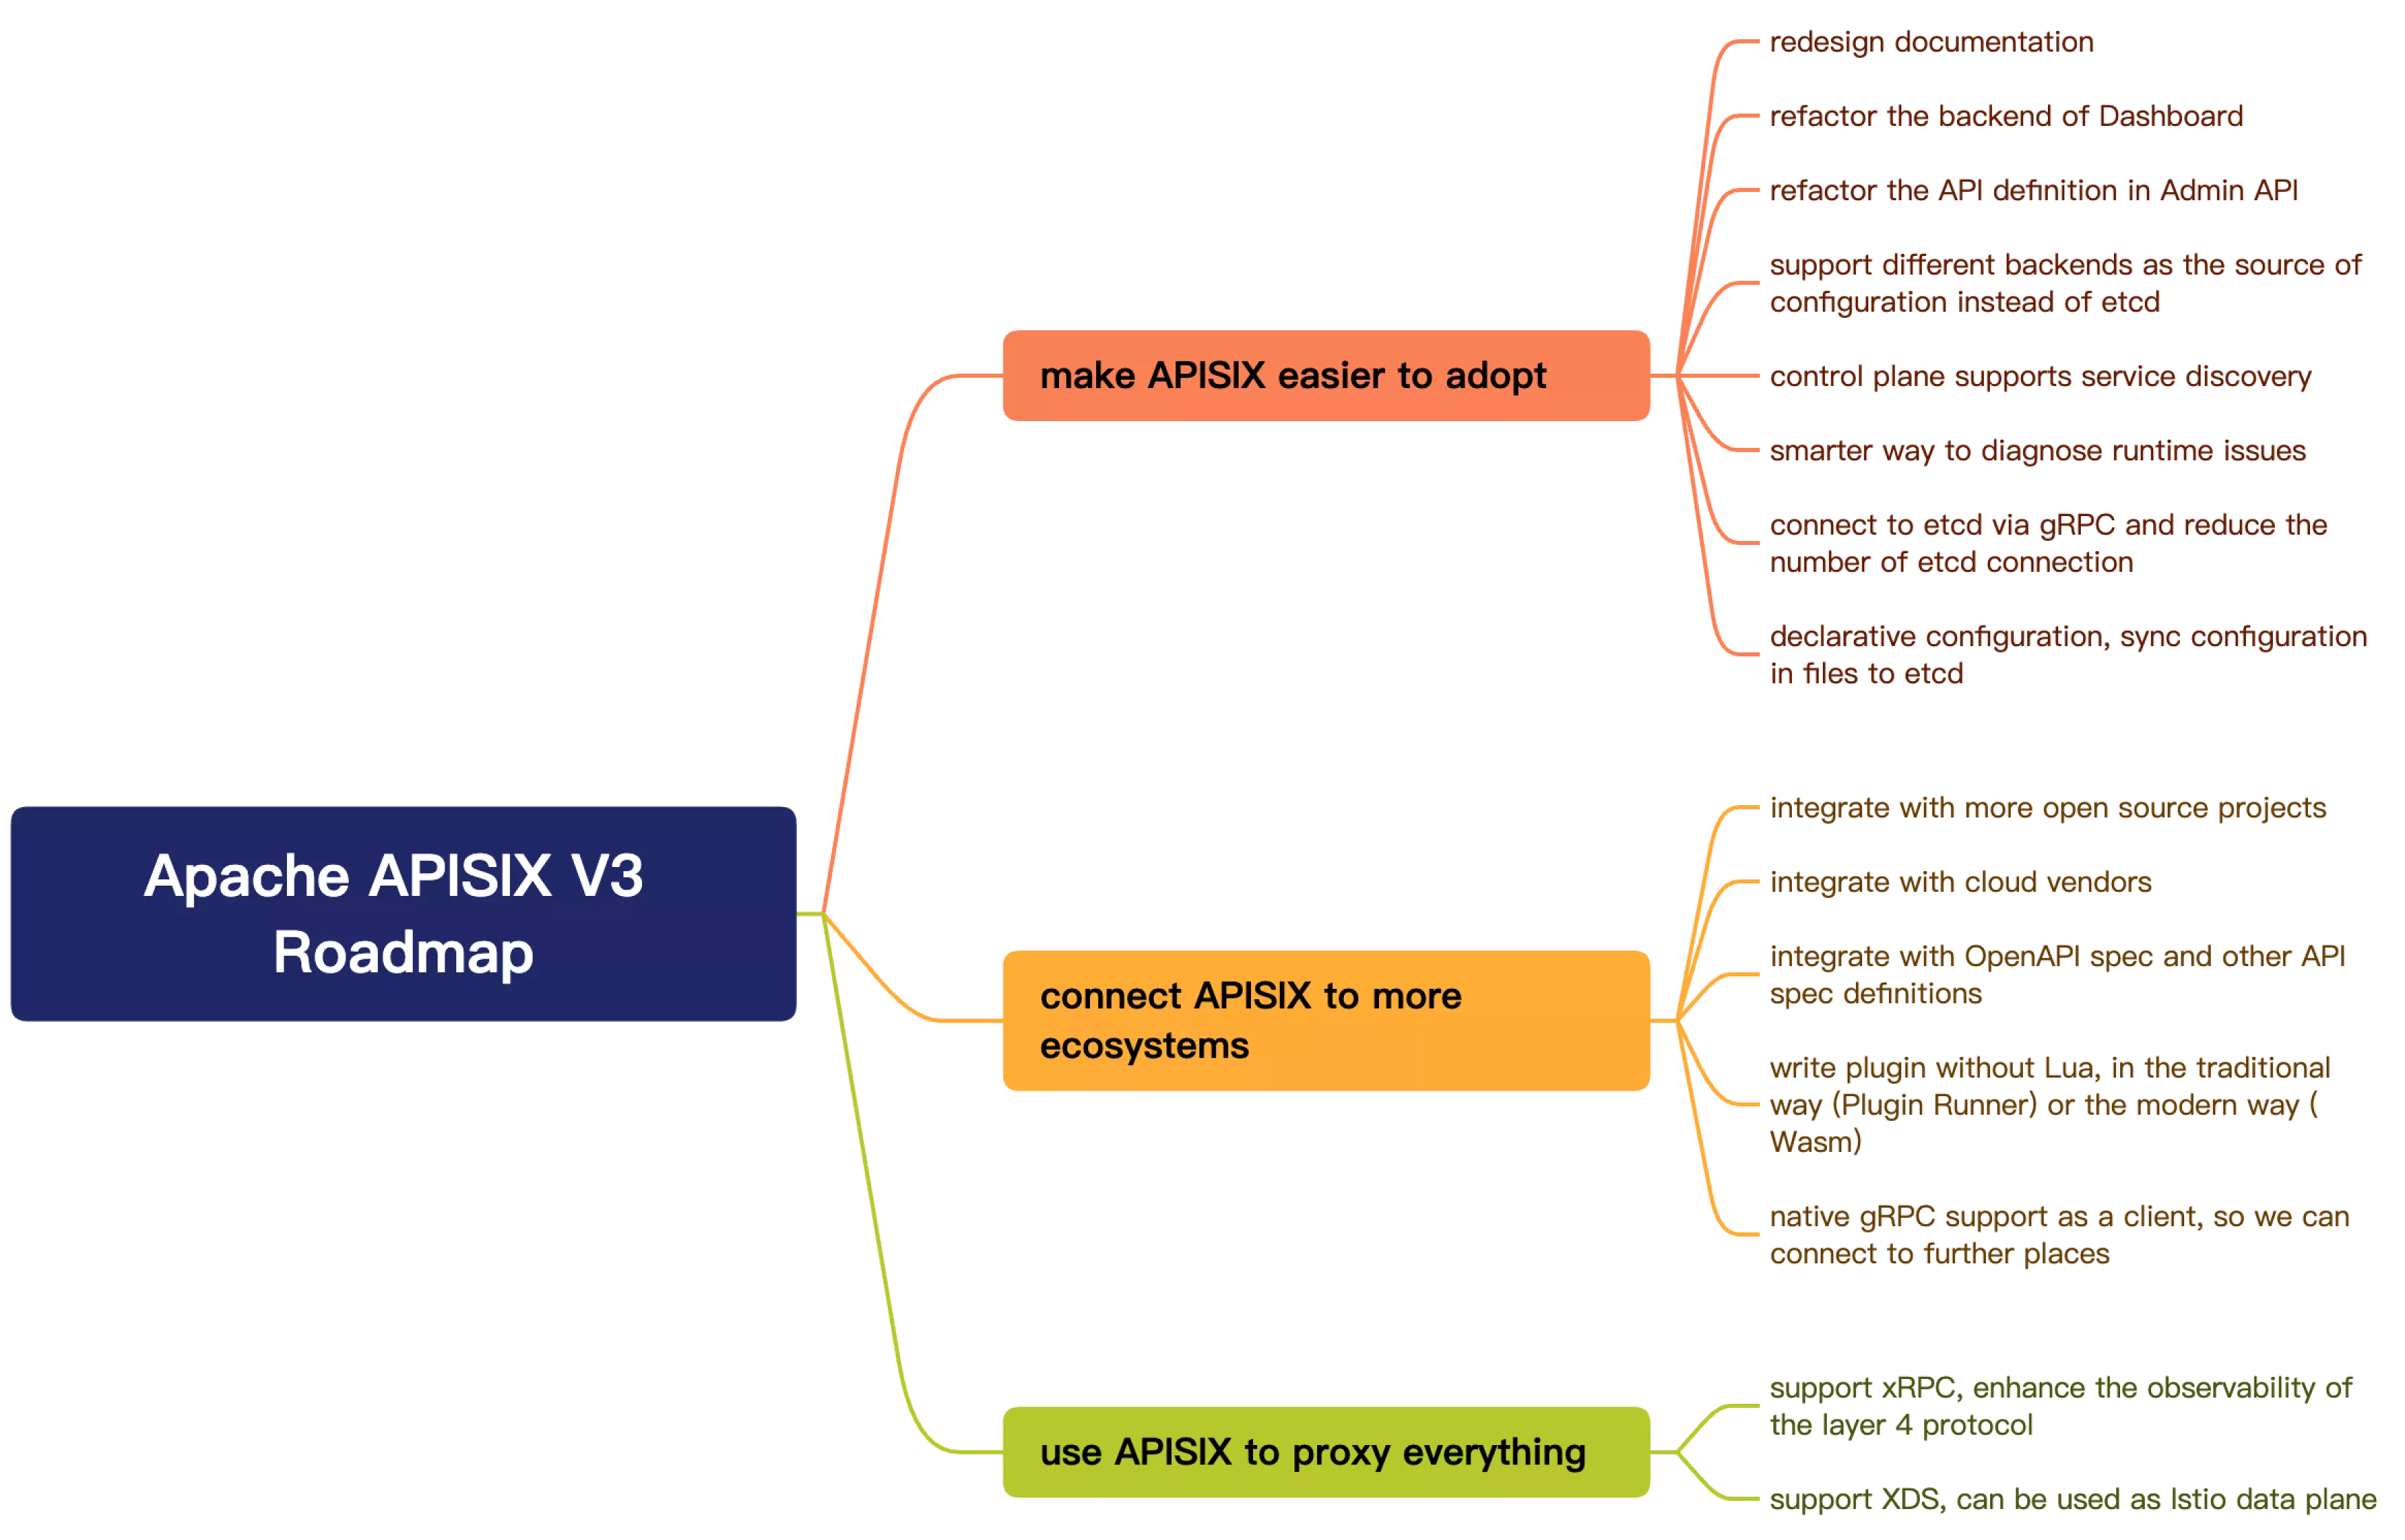 Apache APISIX 3.0 Roadmap